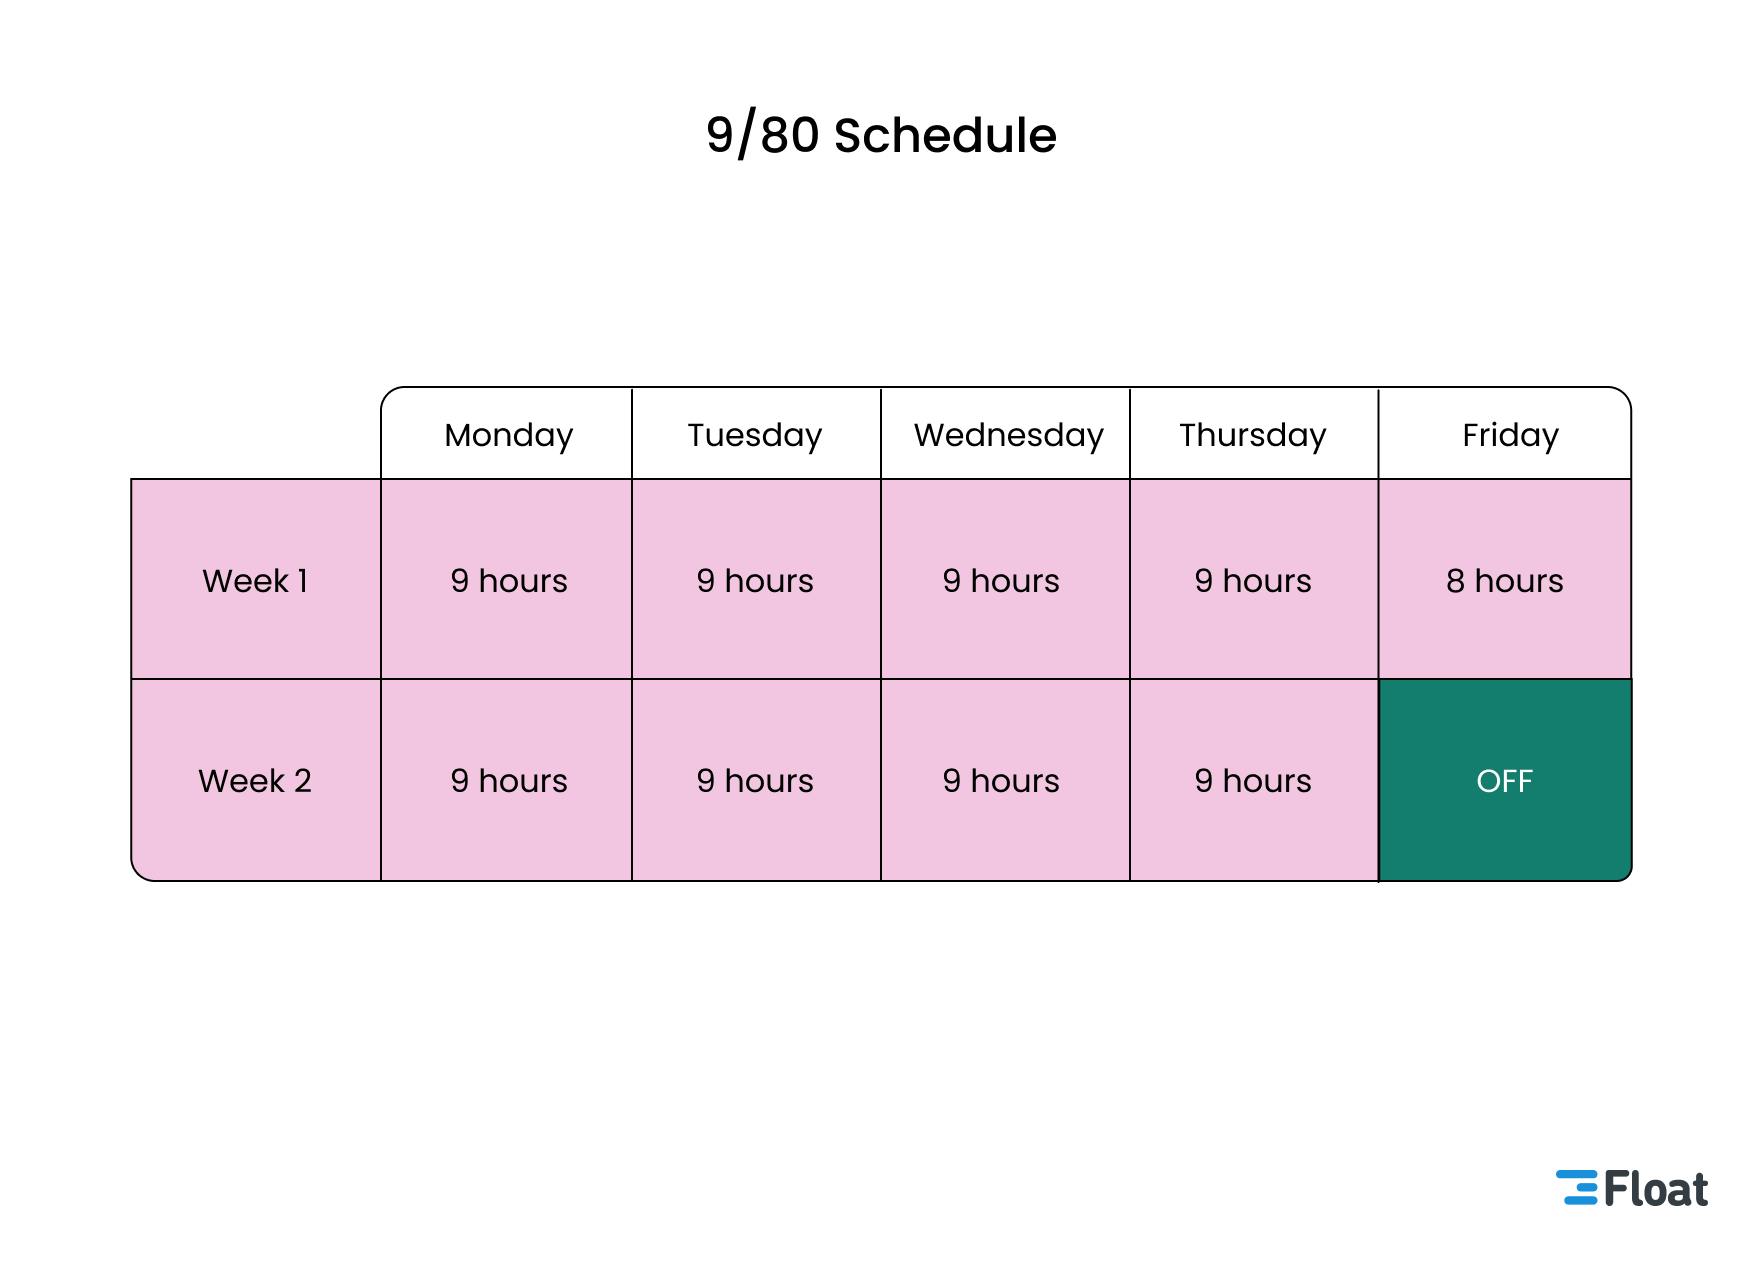 9 80 schedule image